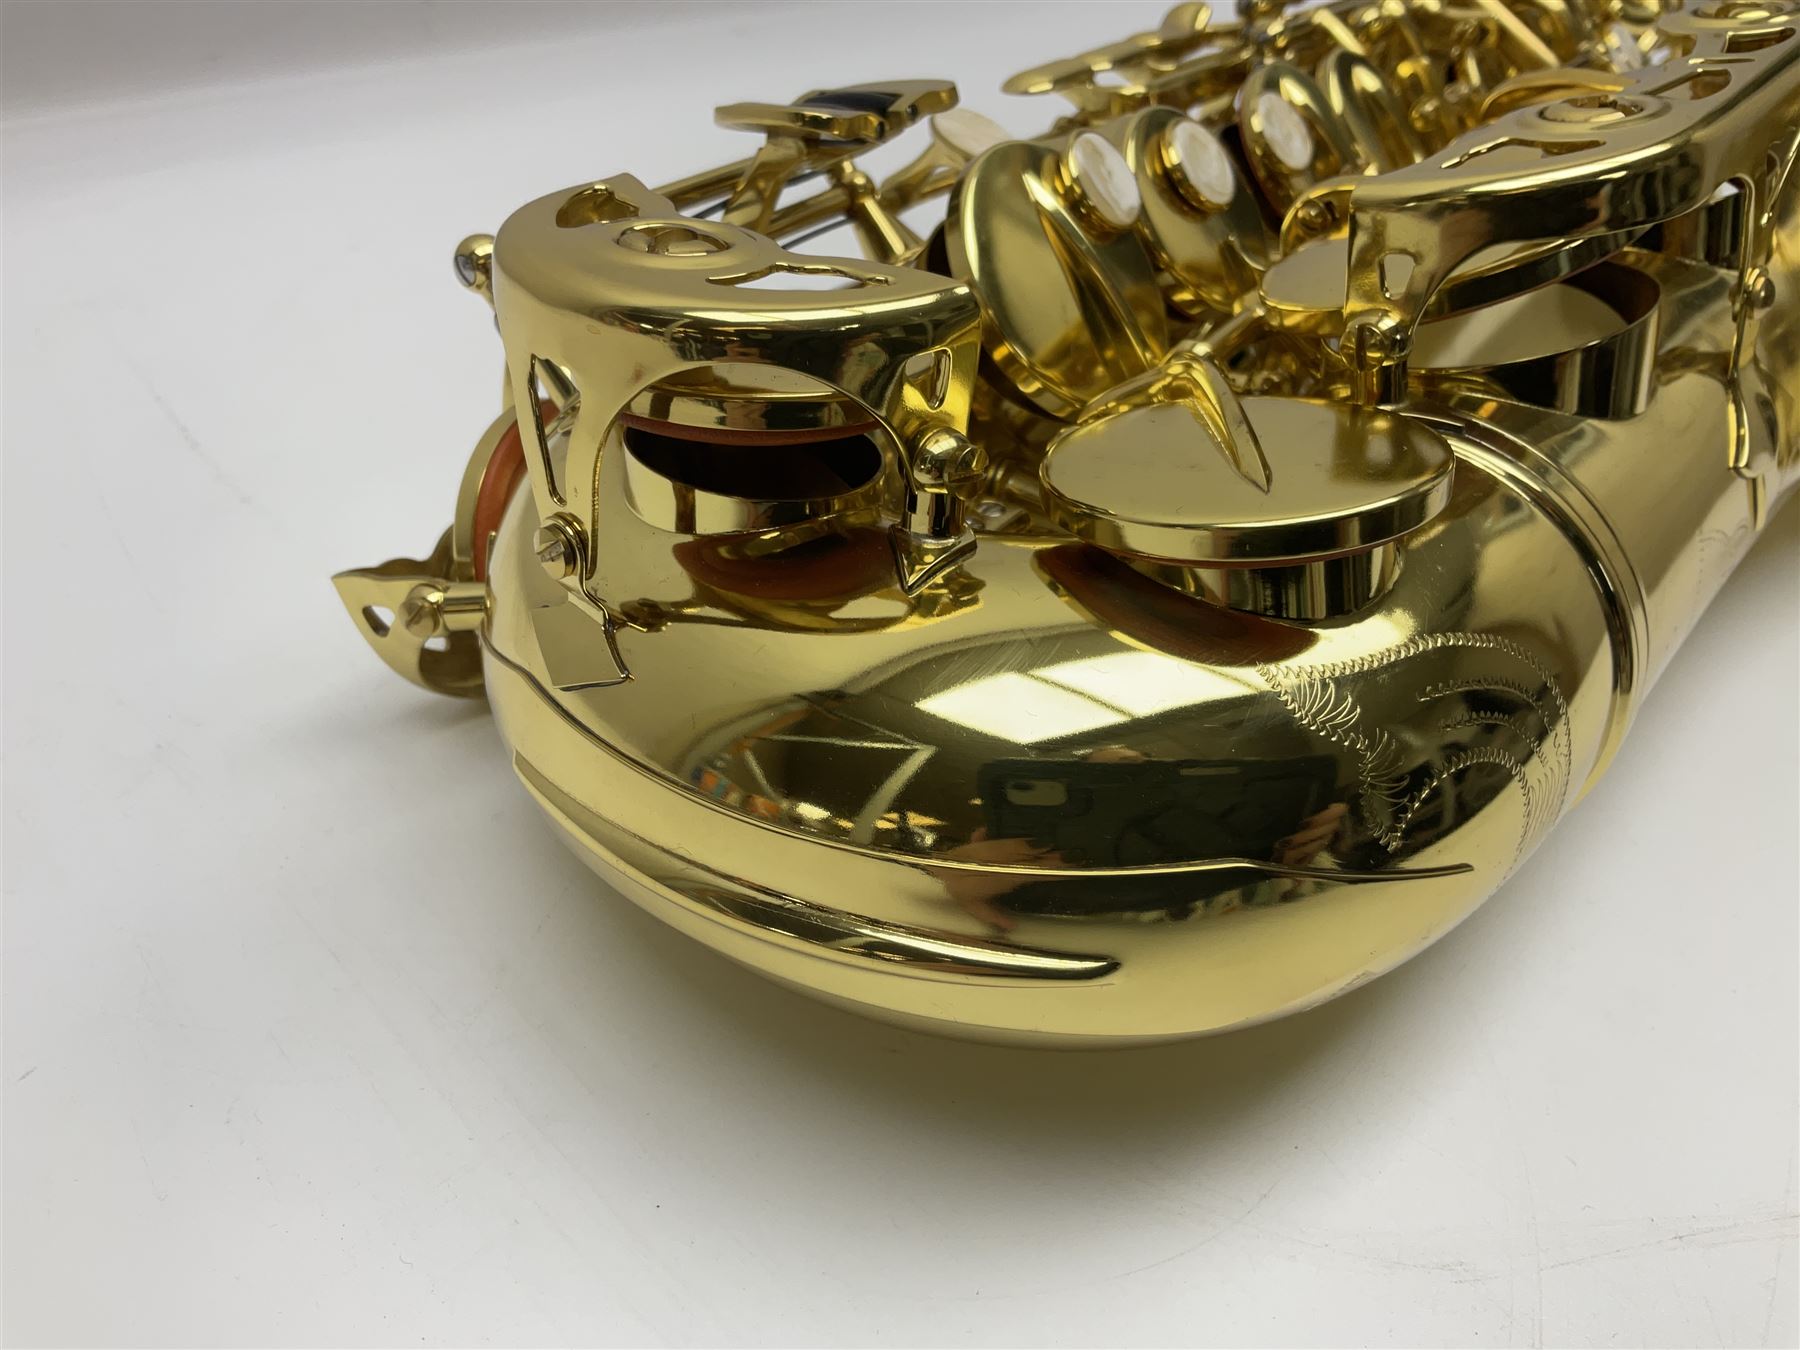 Arnolds & Sons Model ASA-100 alto saxophone - Image 11 of 23